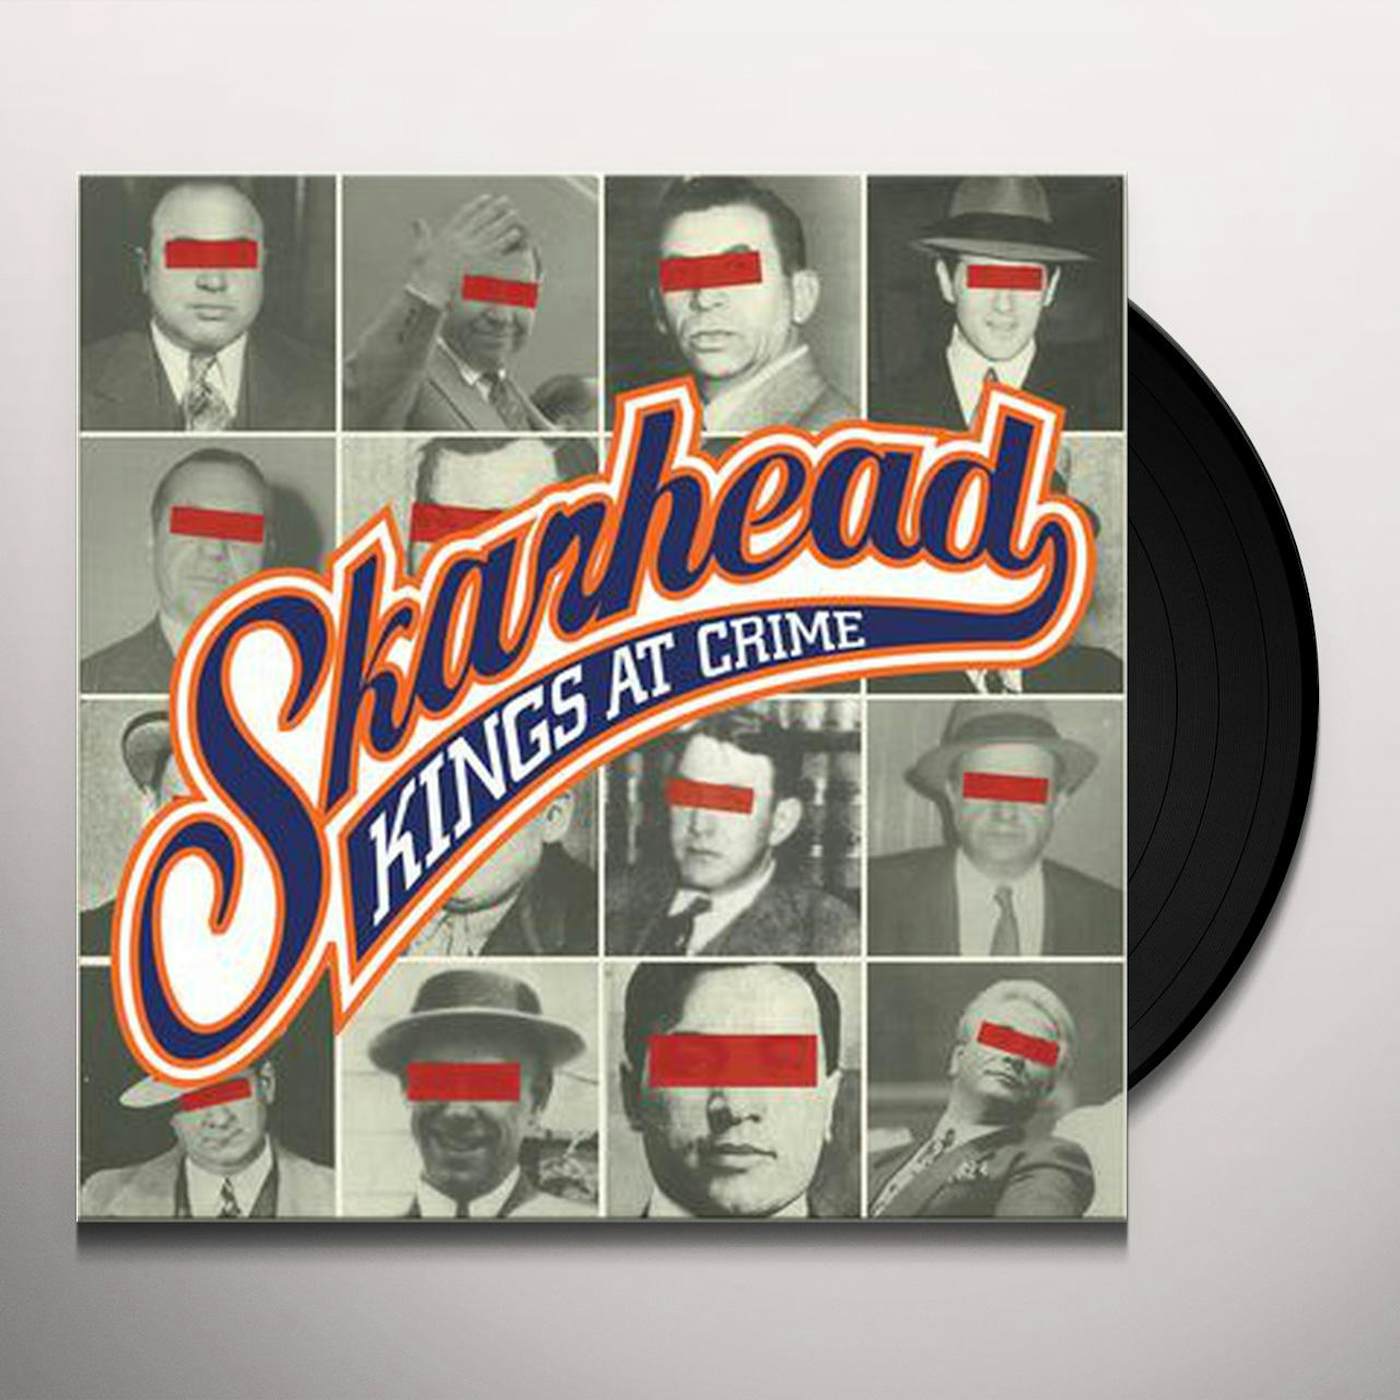 Skarhead Kings at crime Vinyl Record